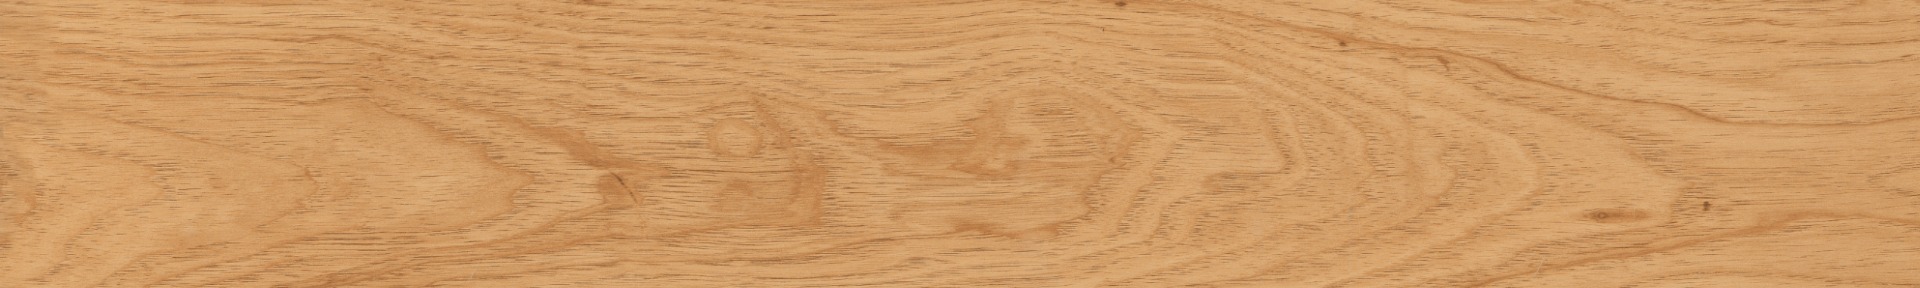 Wooden Plank Tiles for Bathroom Tiles